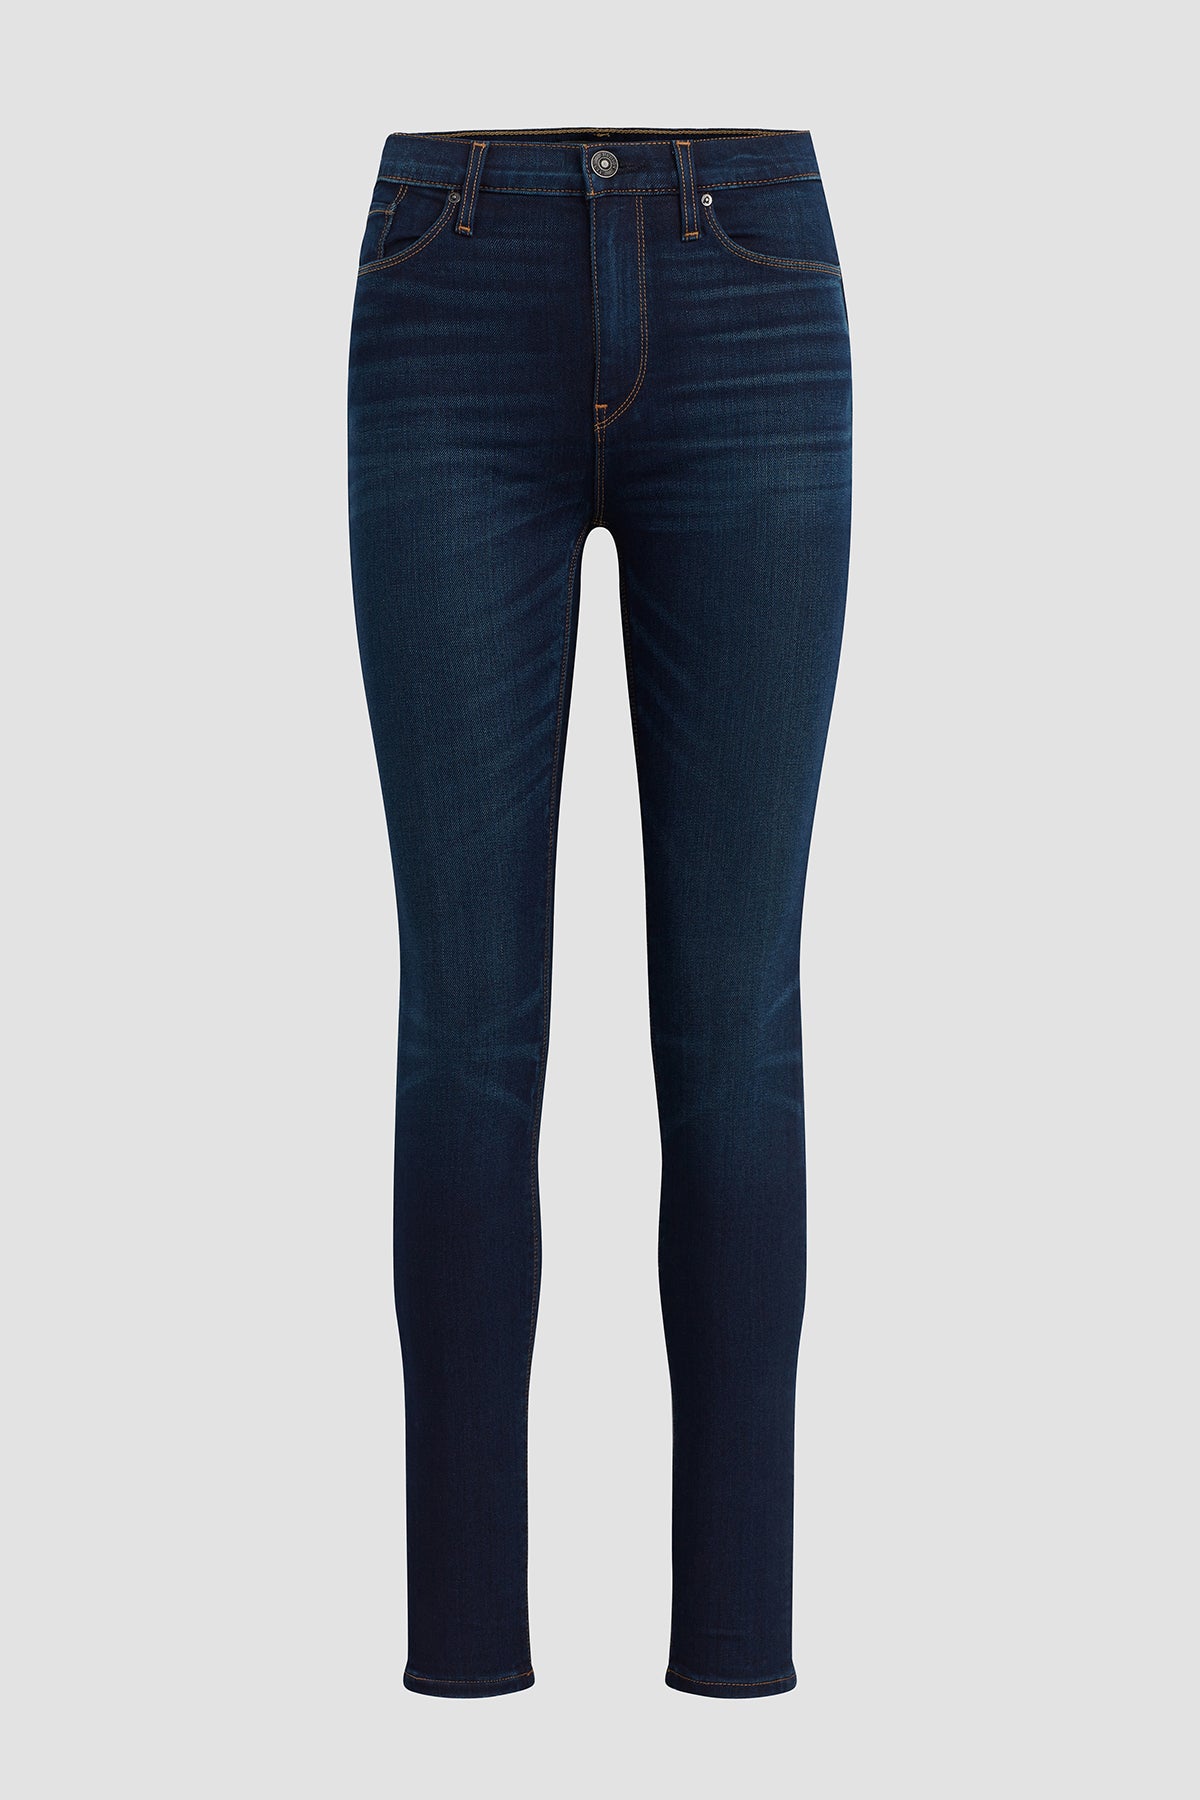 Stradivarius Tall super high waist skinny jeans in medium blue | ASOS